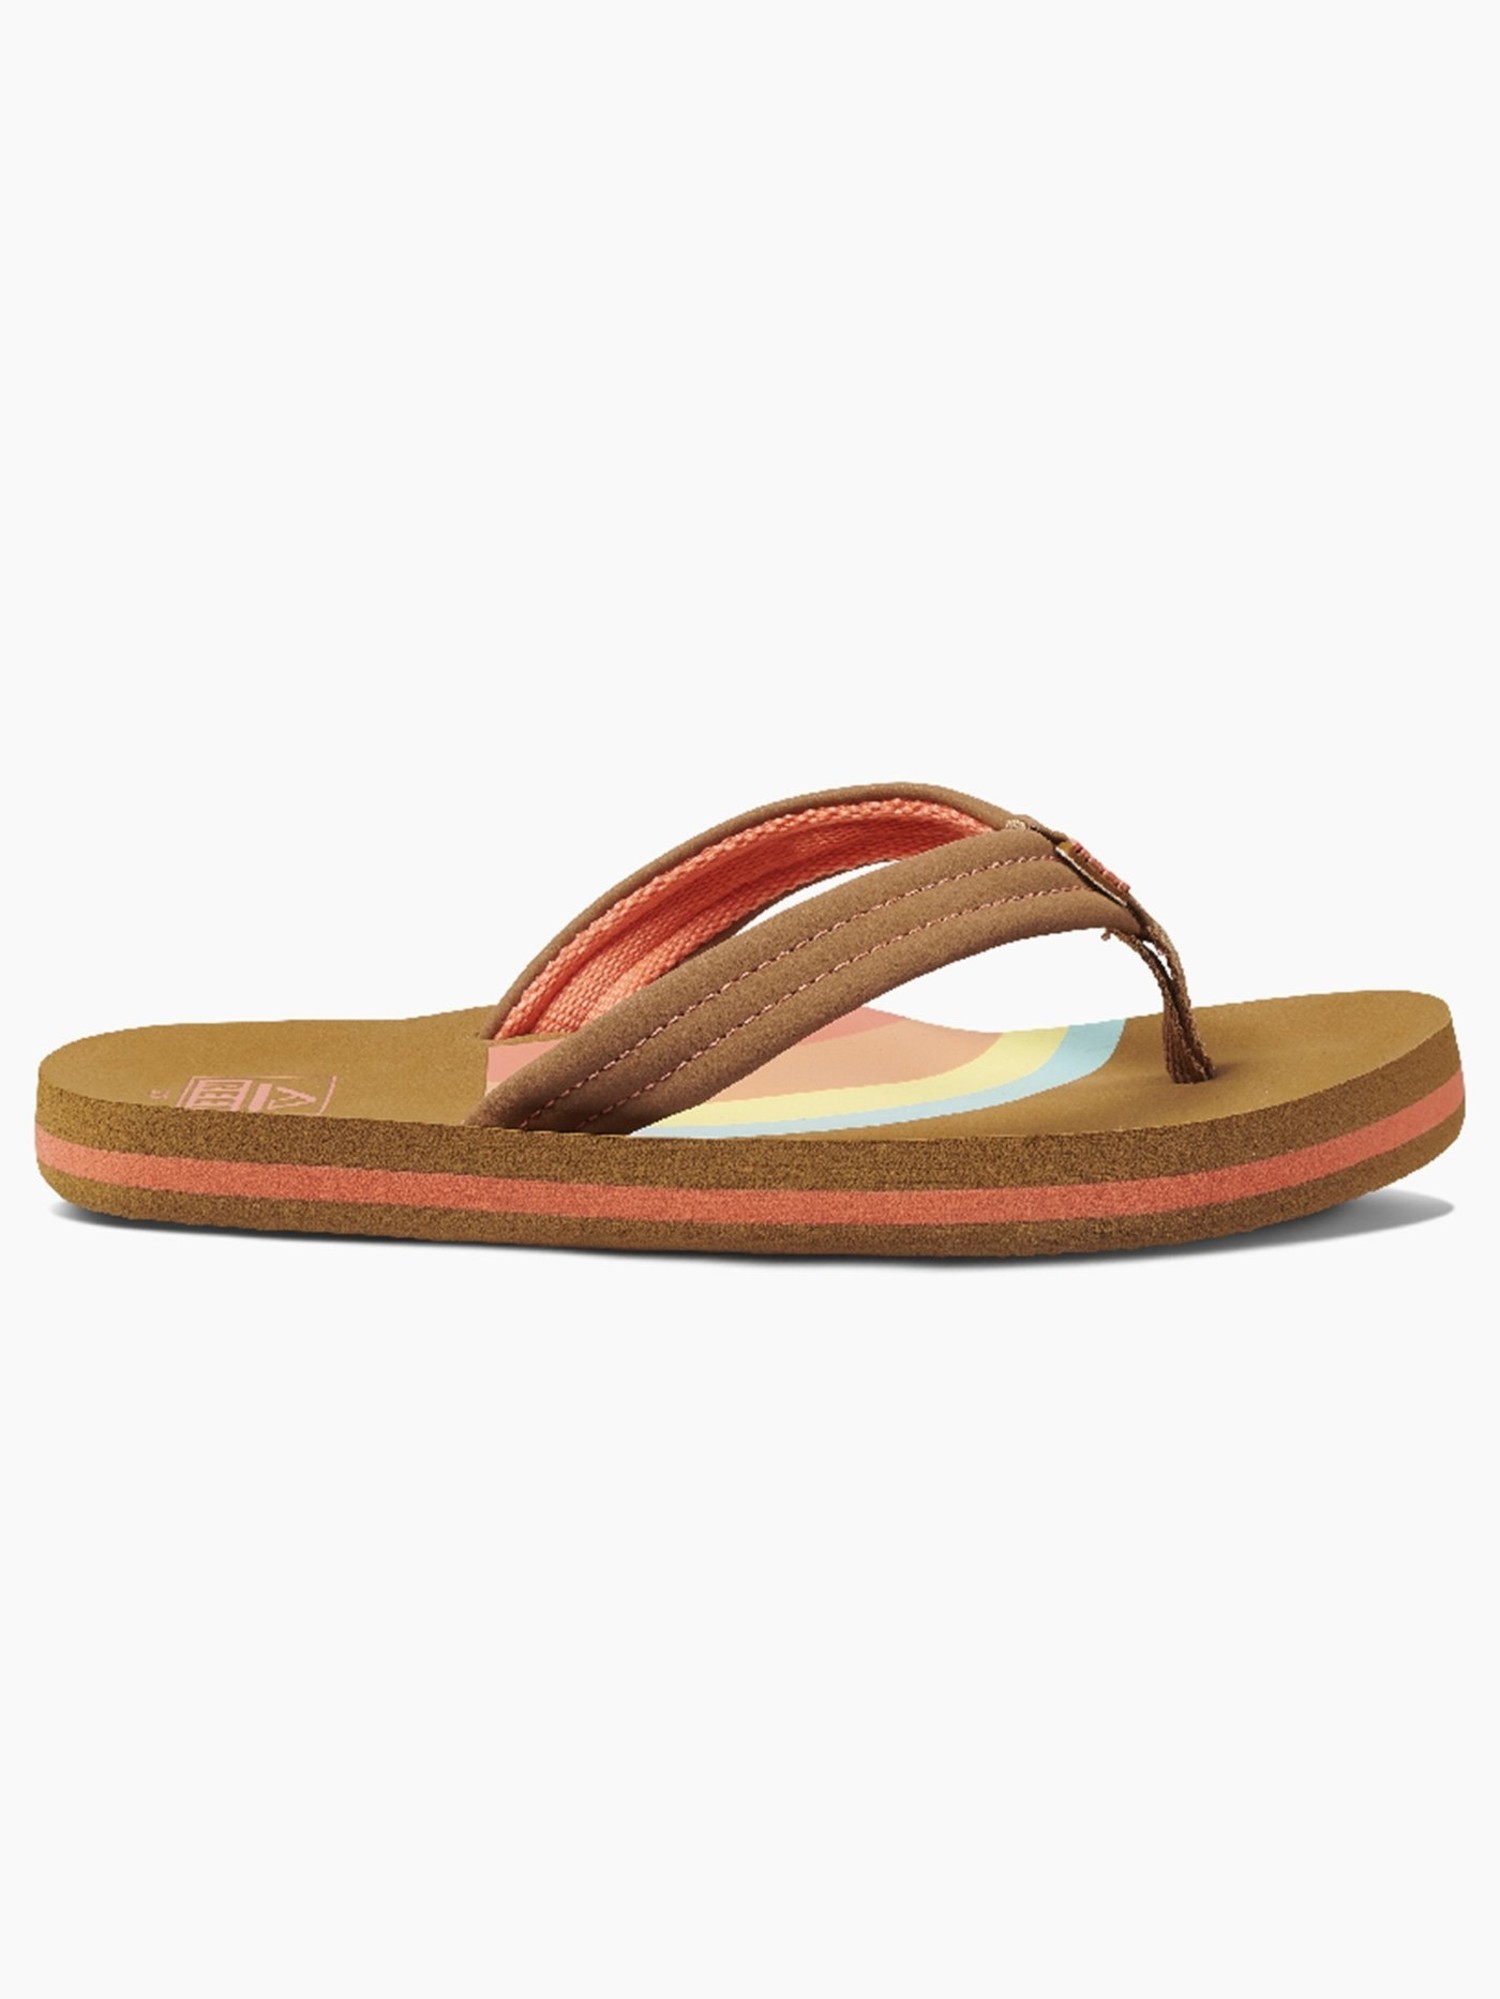 reef or rainbow sandals